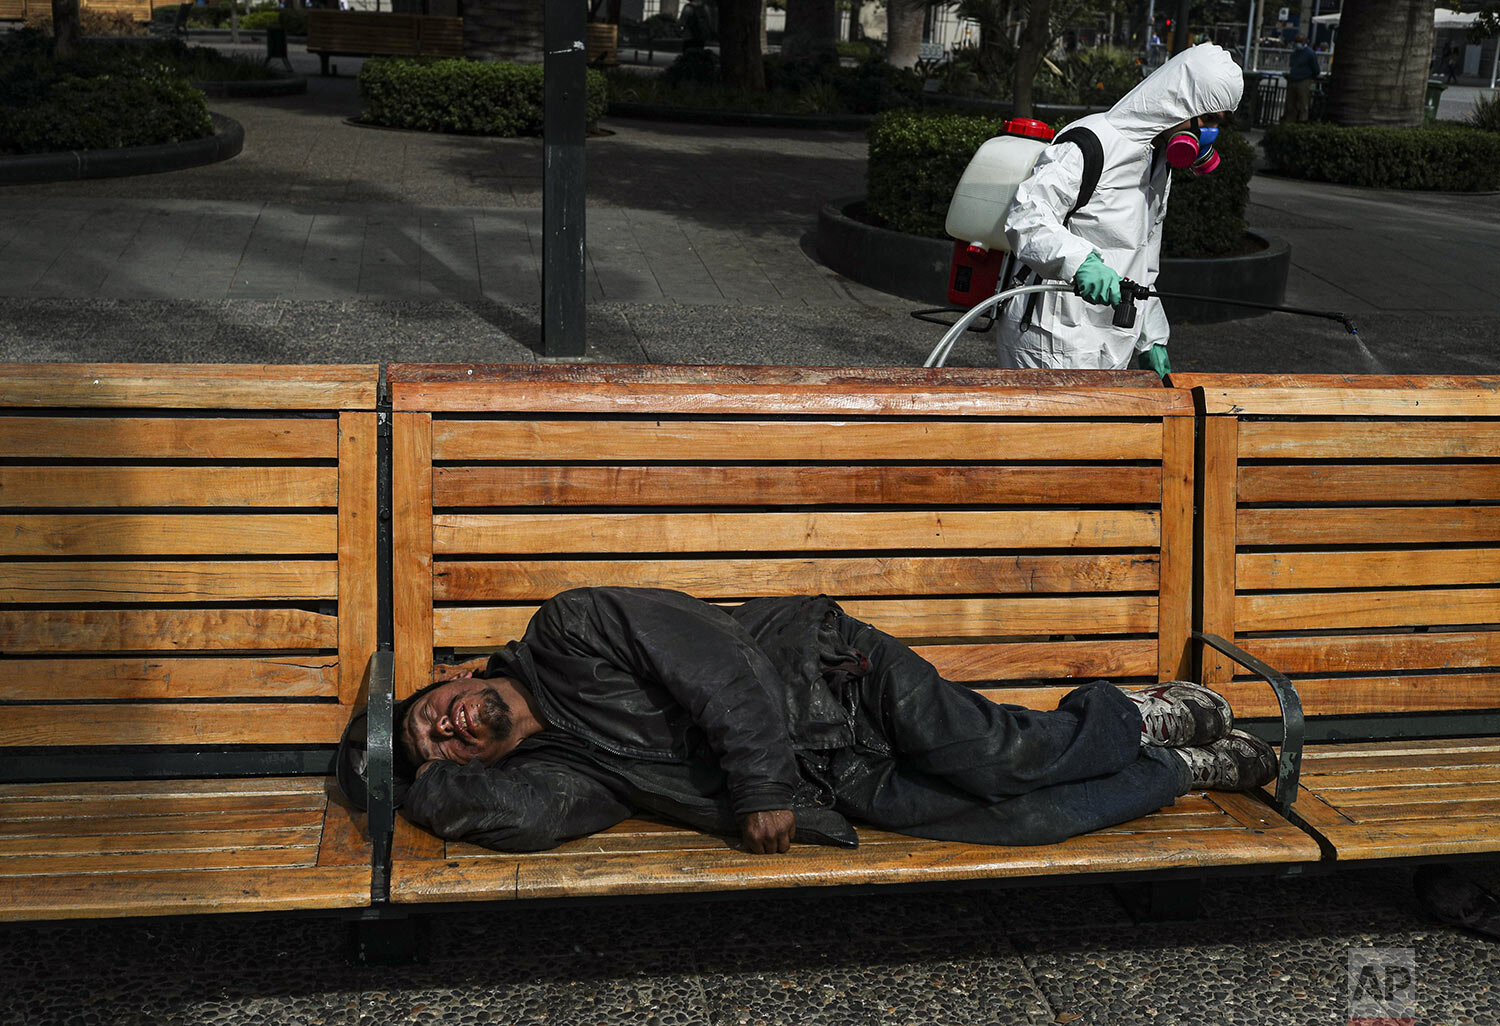  A city worker sprays disinfectant to help contain the spread of the new coronavirus near a man sleeping in the Plaza de Armas in Santiago, Chile, Wednesday, April 15, 2020. (AP Photo/Esteban Felix) 